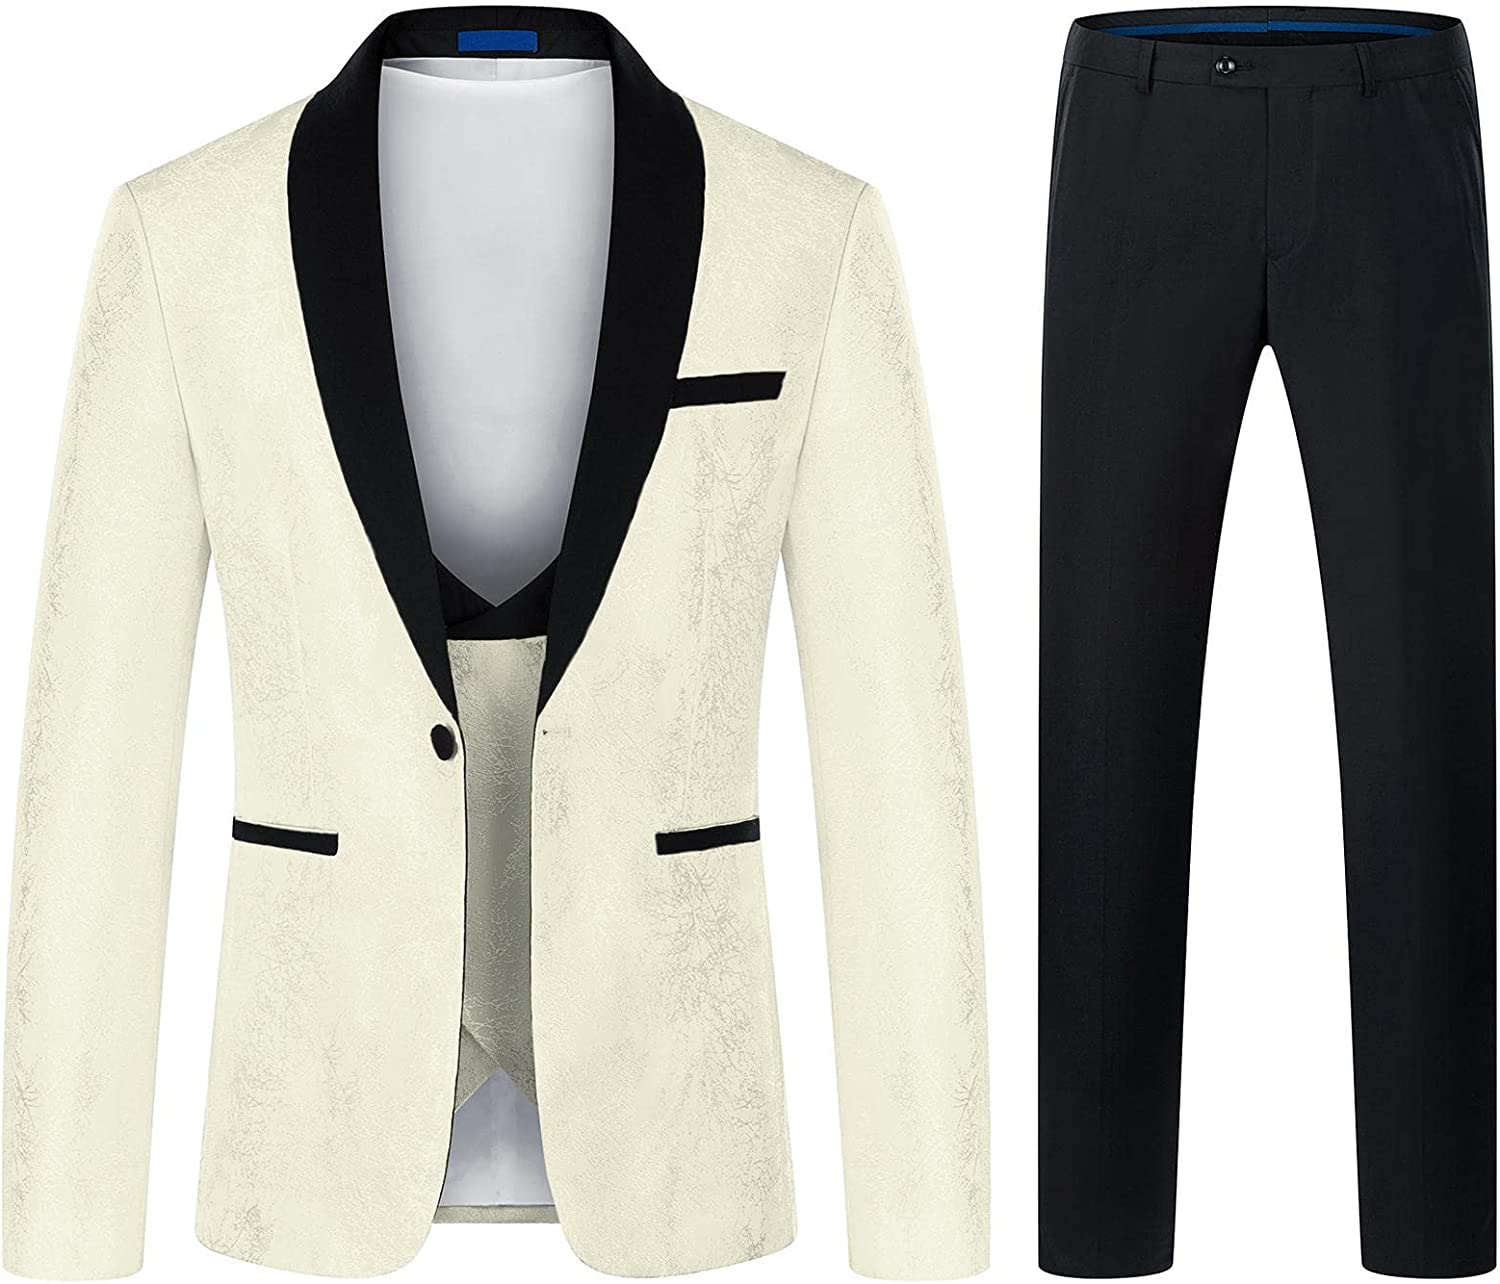 Mens Tuxedo Suits Slim Fit 3 Piece, Formal Skinny Tuxedo Suit Set